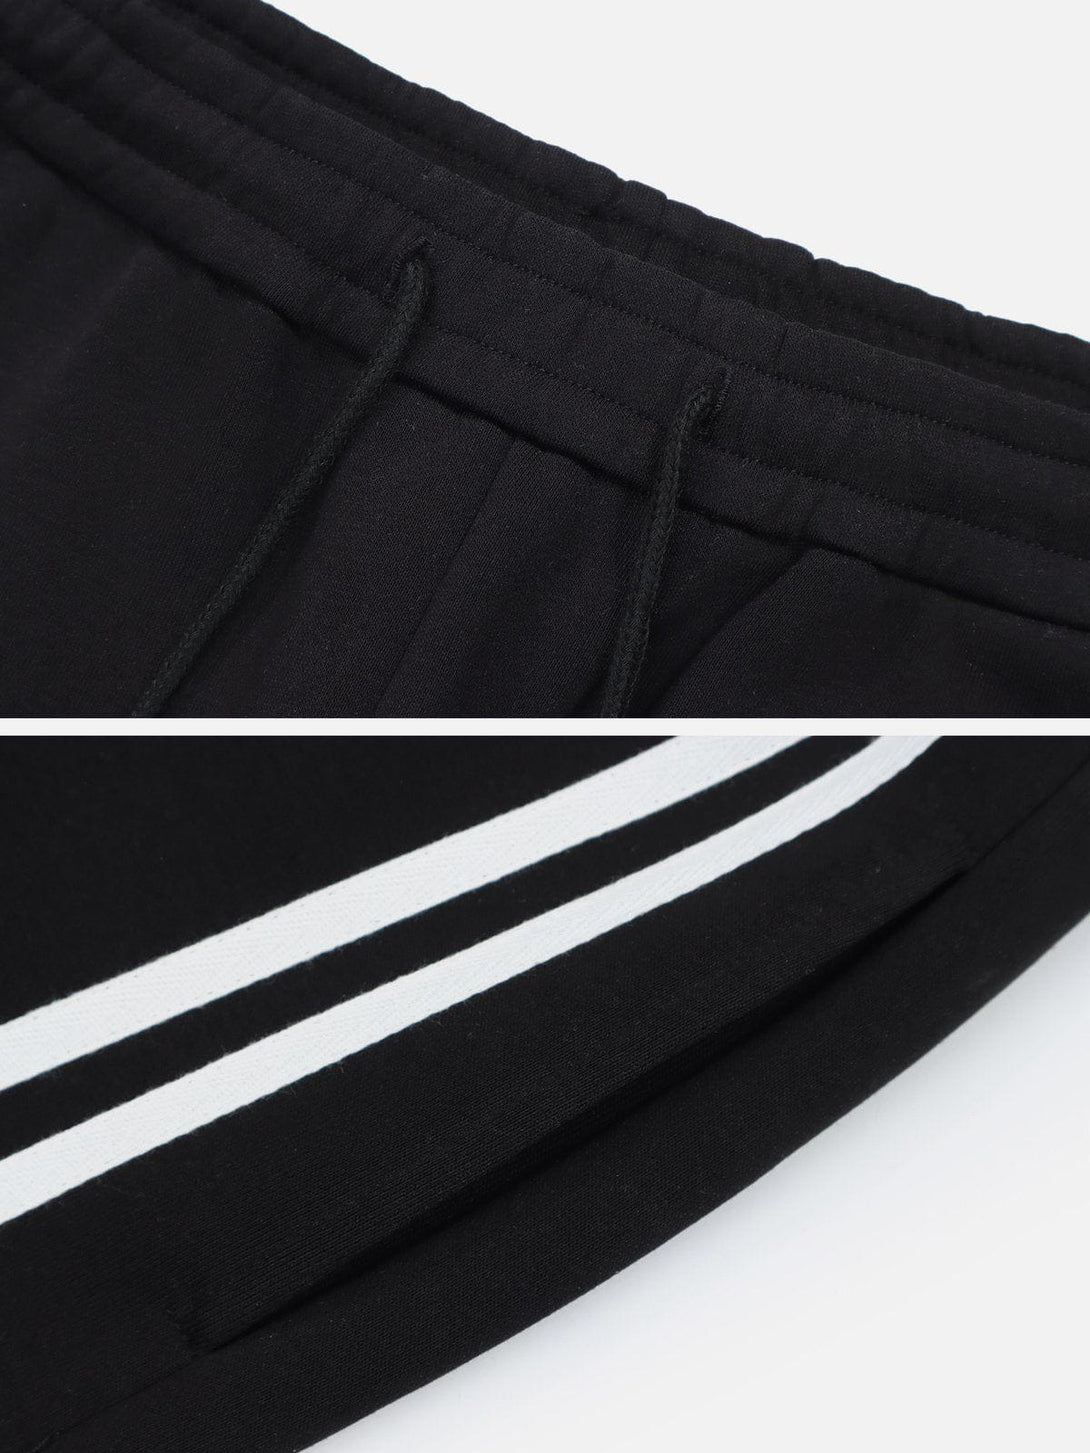 Levefly - Striped Side Pockets Sweatpants - Streetwear Fashion - levefly.com